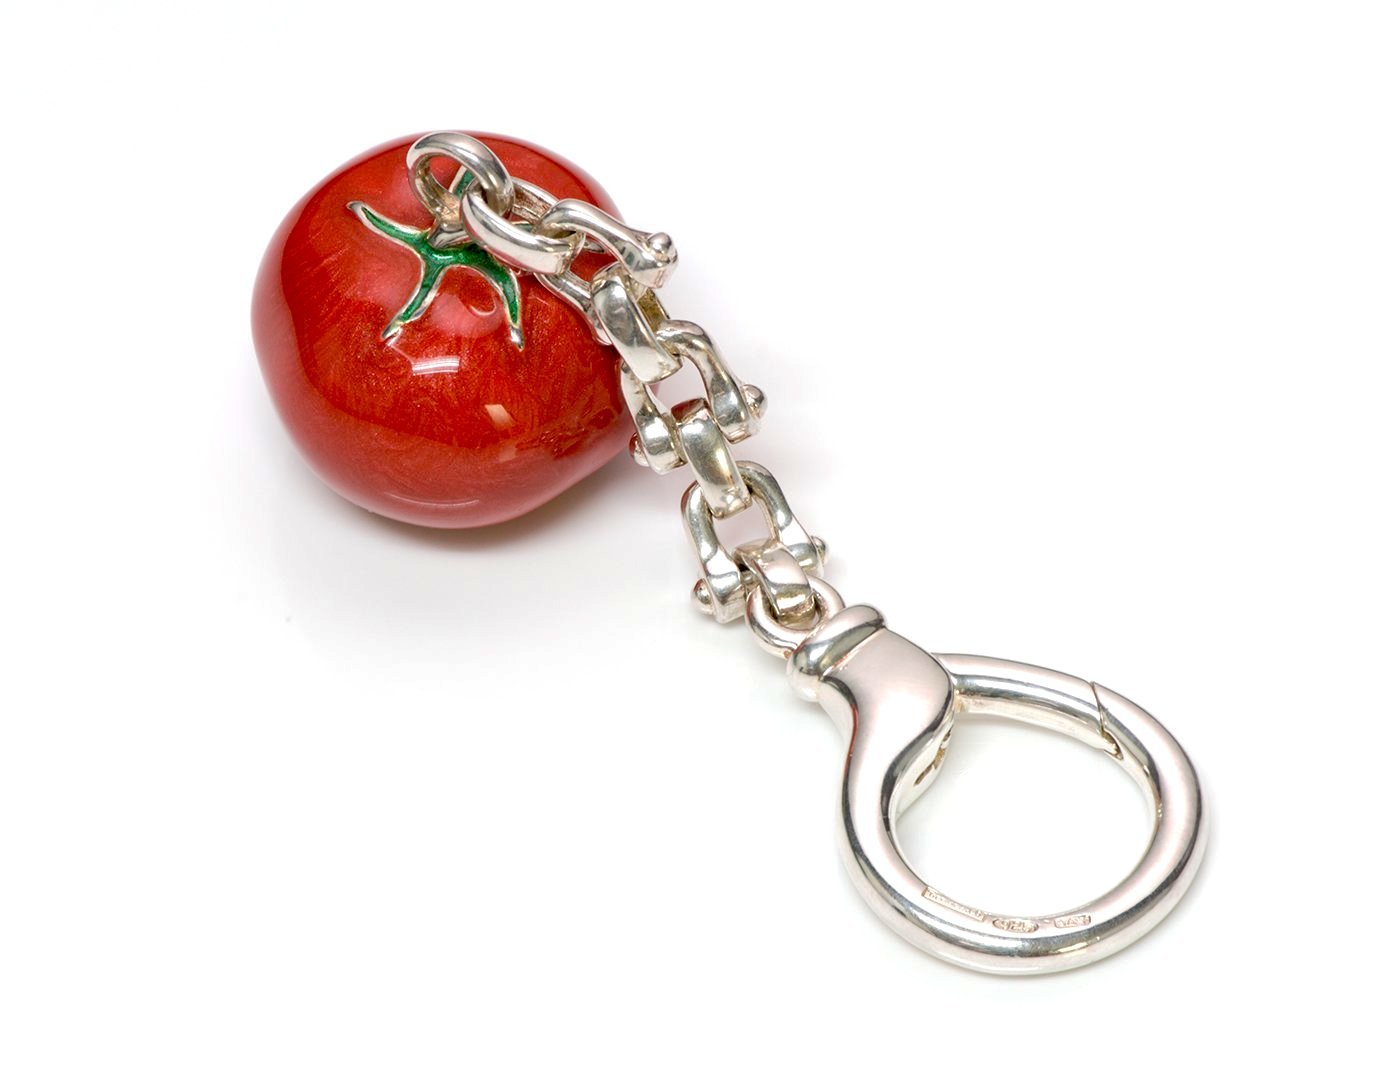 Tiffany & Co. Enamel Tomato Key Chain